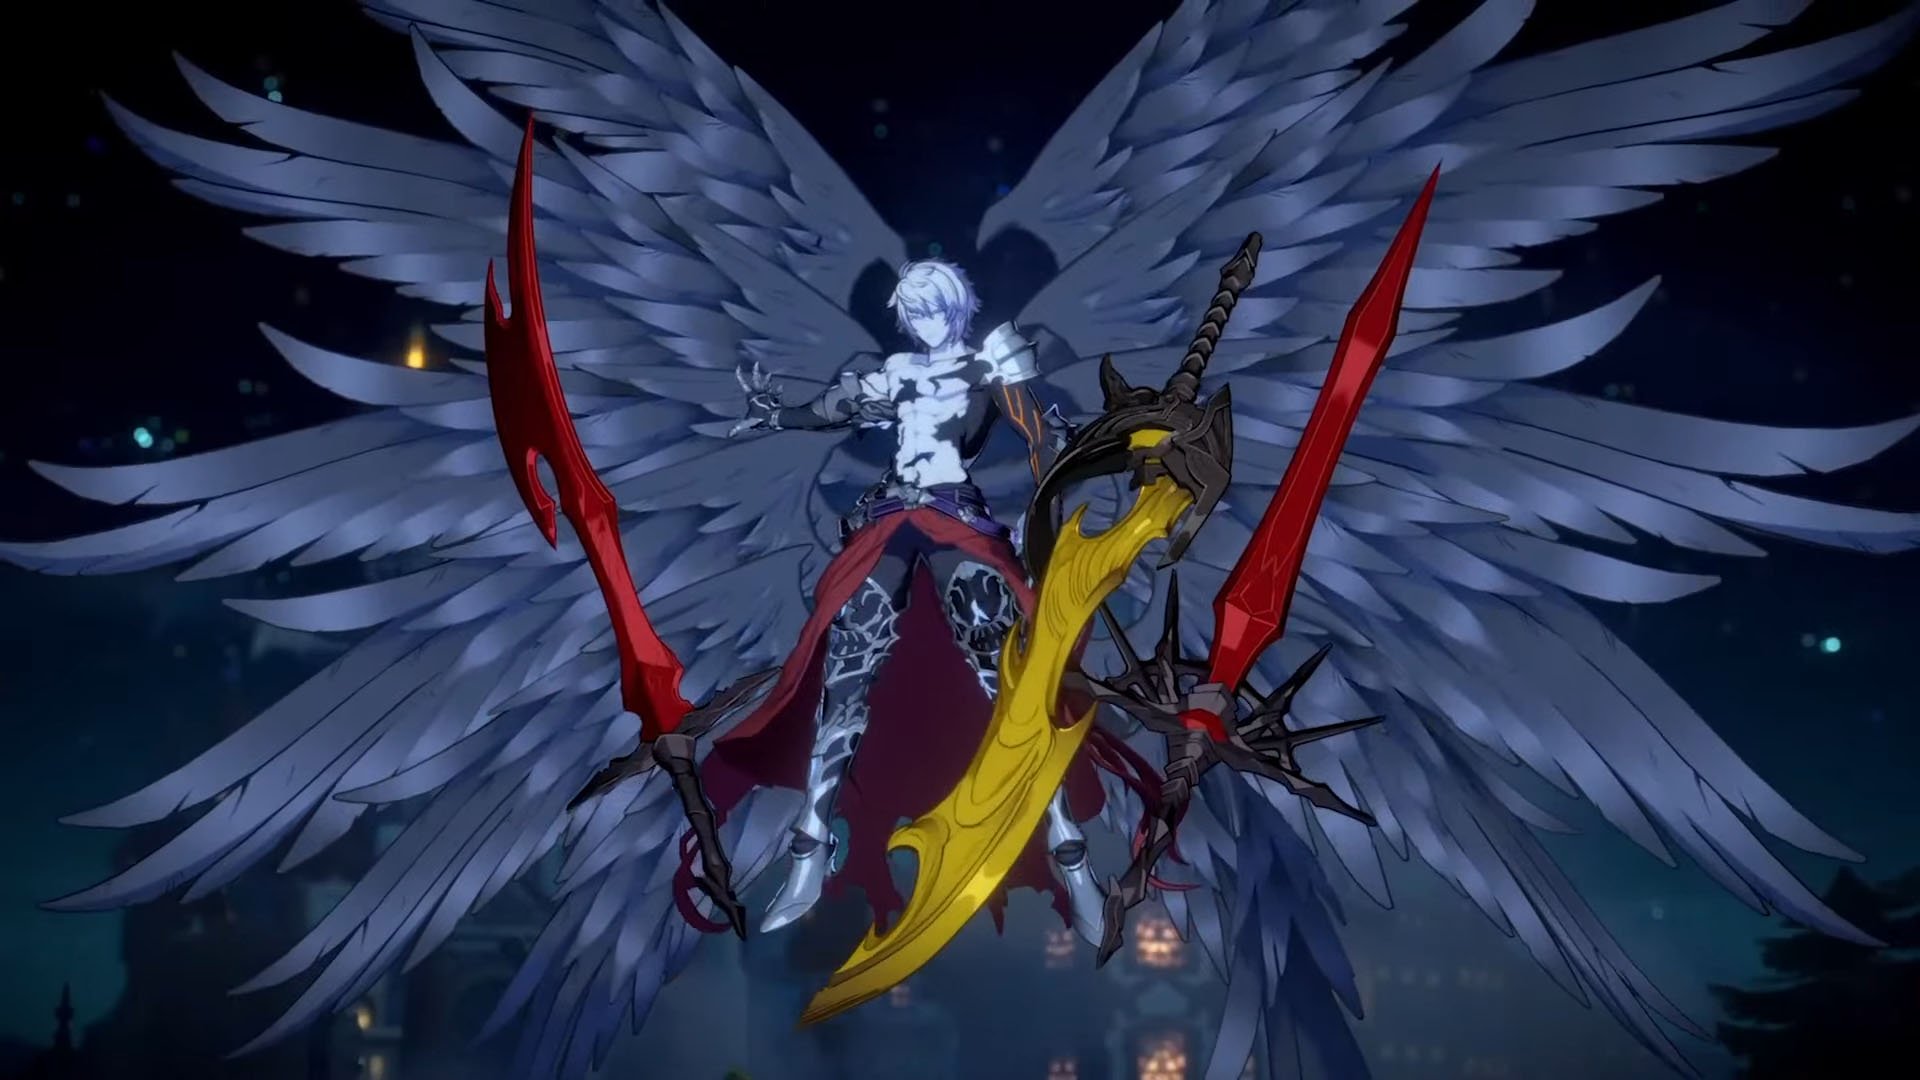 Granblue Fantasy Versus: Rising - Premium Avatar Set (Umamusume: Pretty  Derby) on Steam